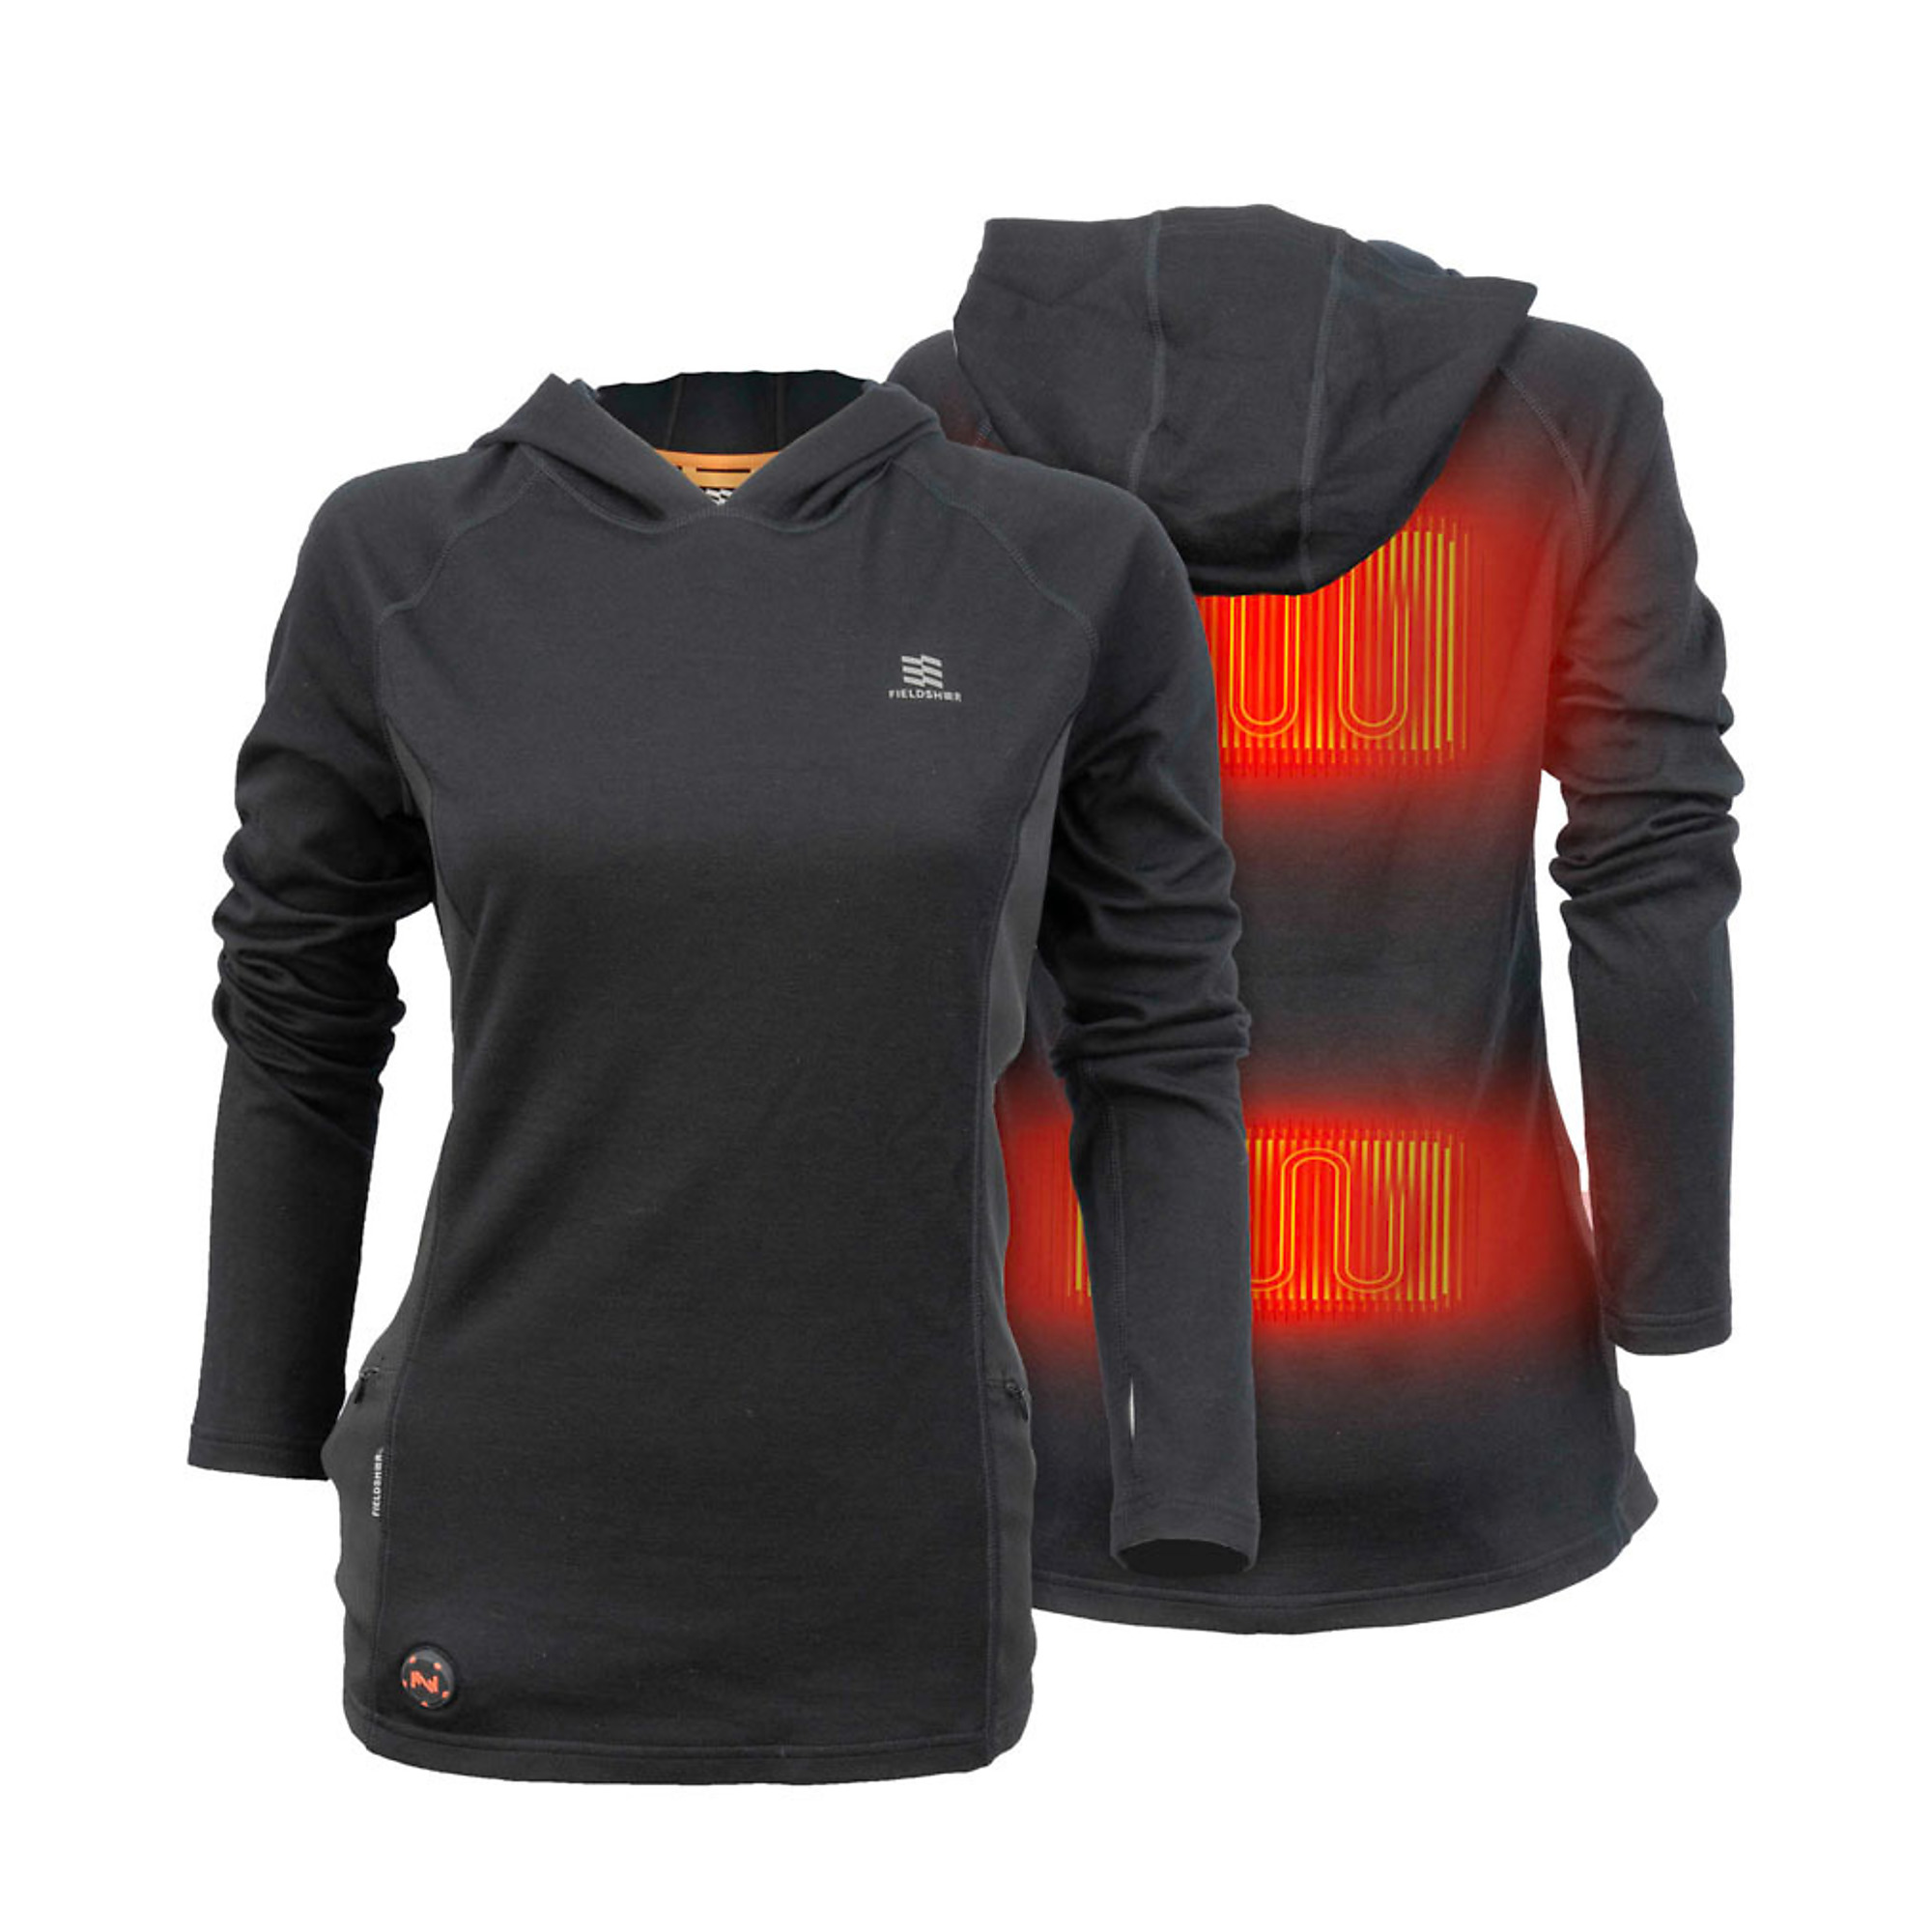 Fieldsheer, Women's Merino Heated Baselayer Shirt, Size S, Color Black, Model MWWT14010221